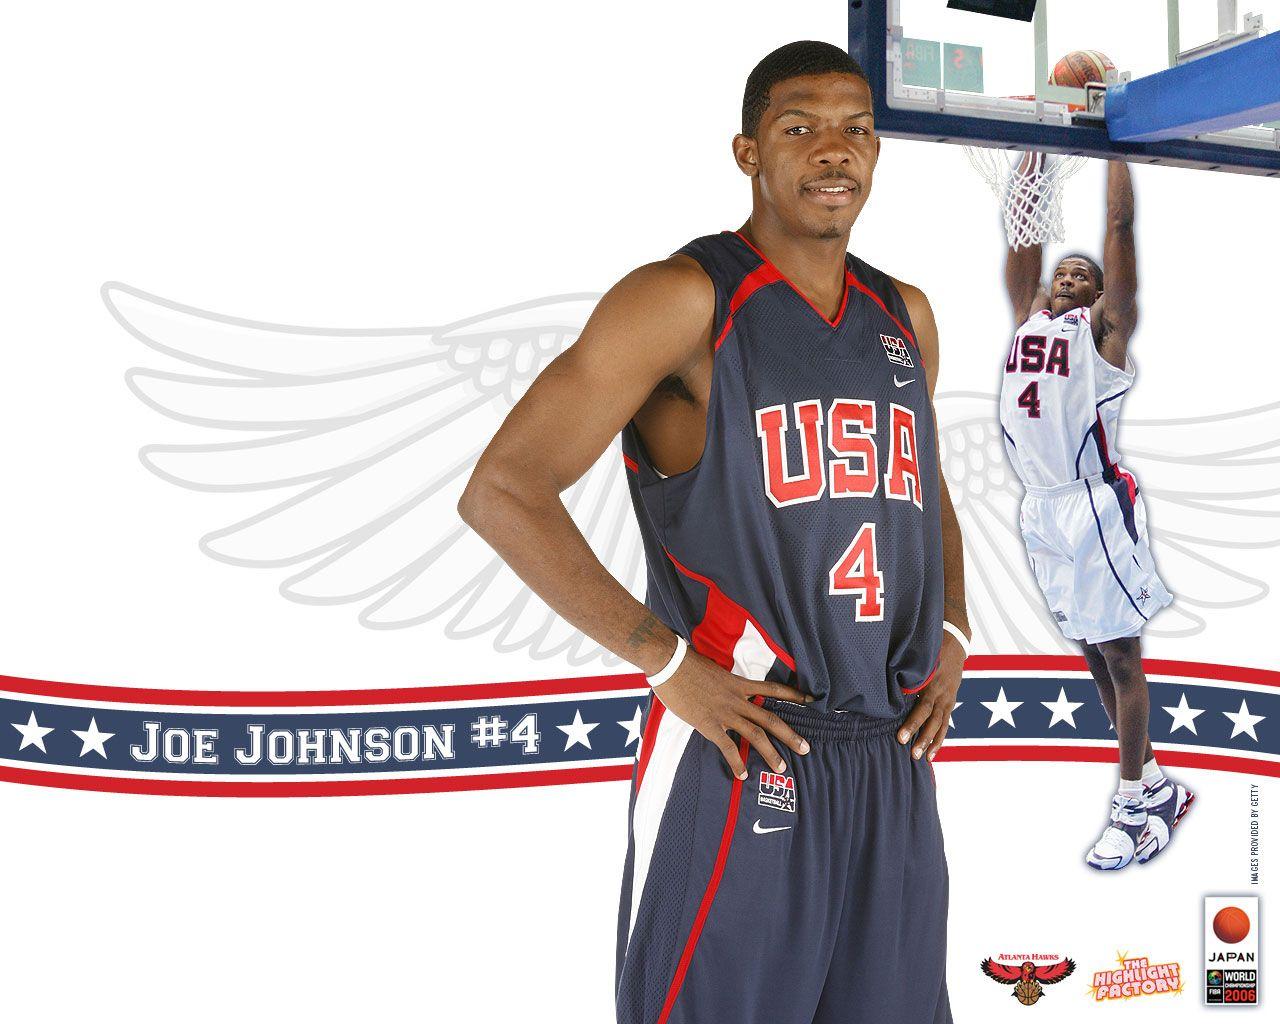 Joe Johnson Dream team Wallpaper. Basketball Wallpaper at